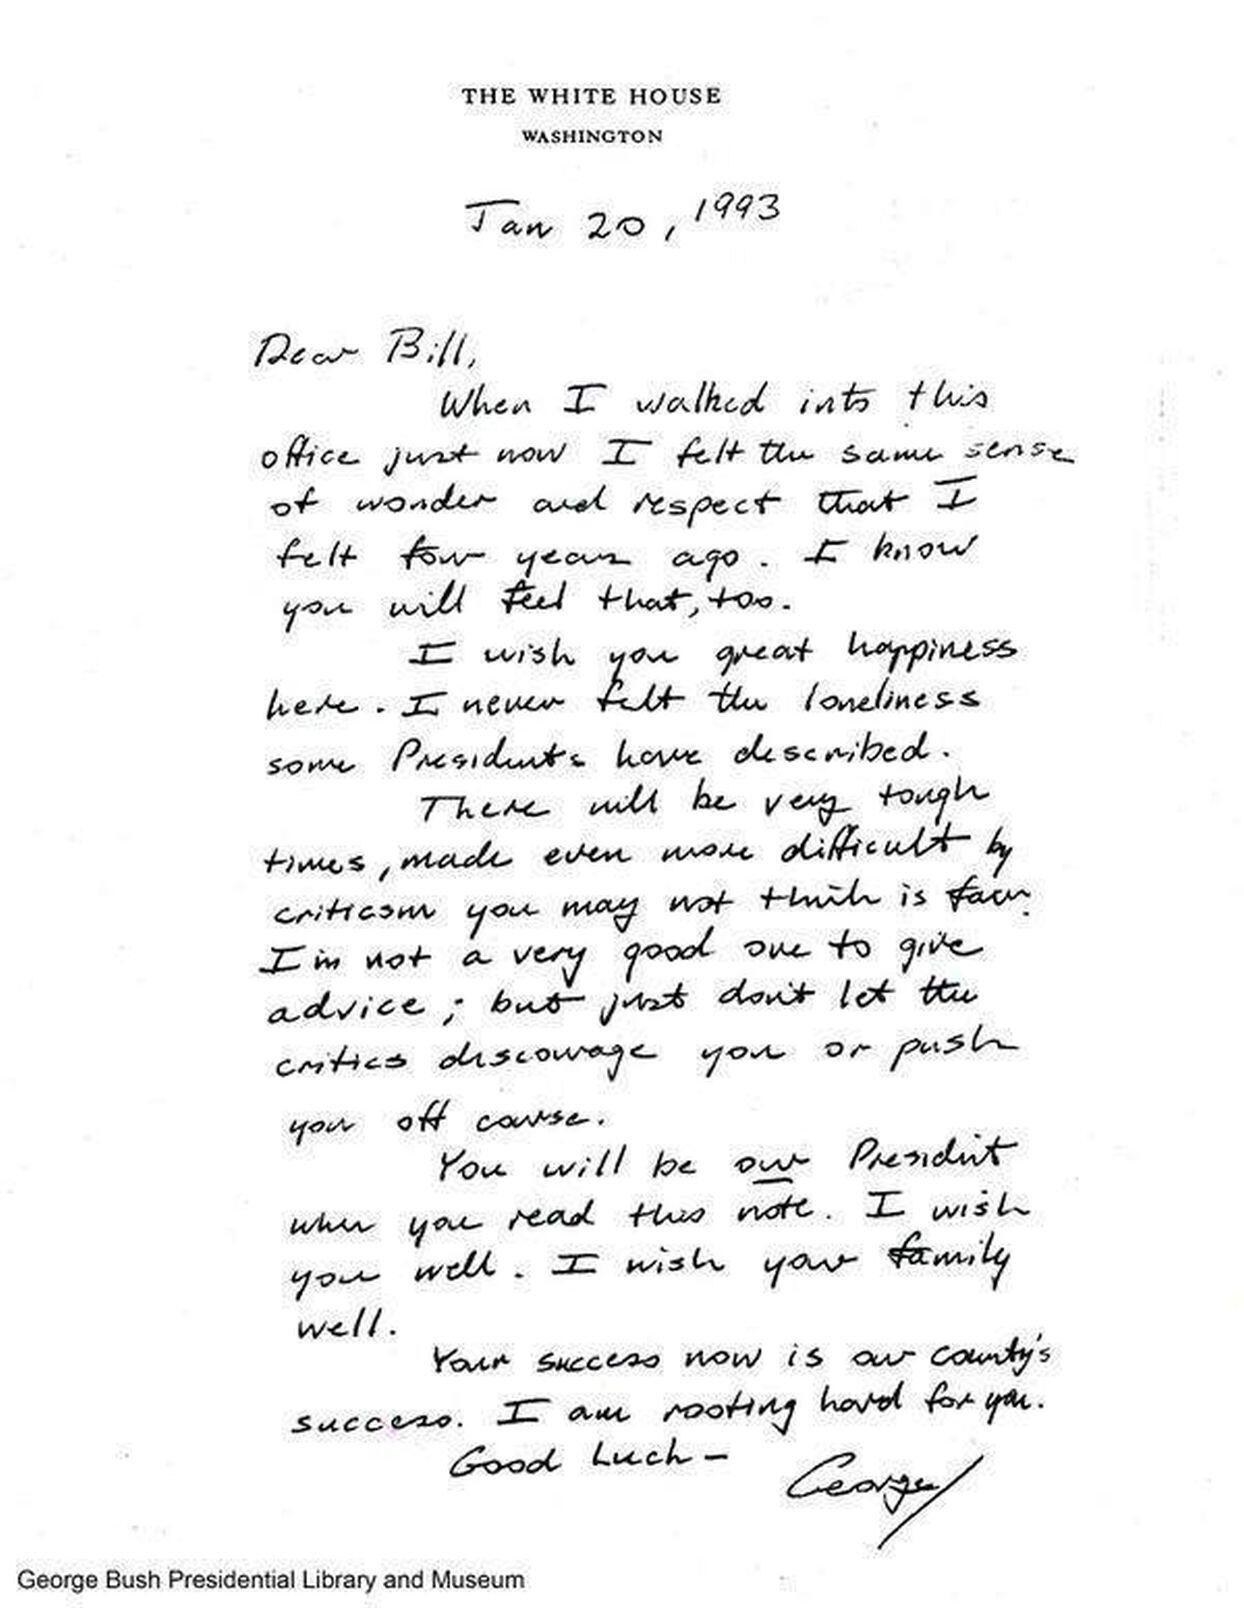 Handwritten note dated January 20, 1993